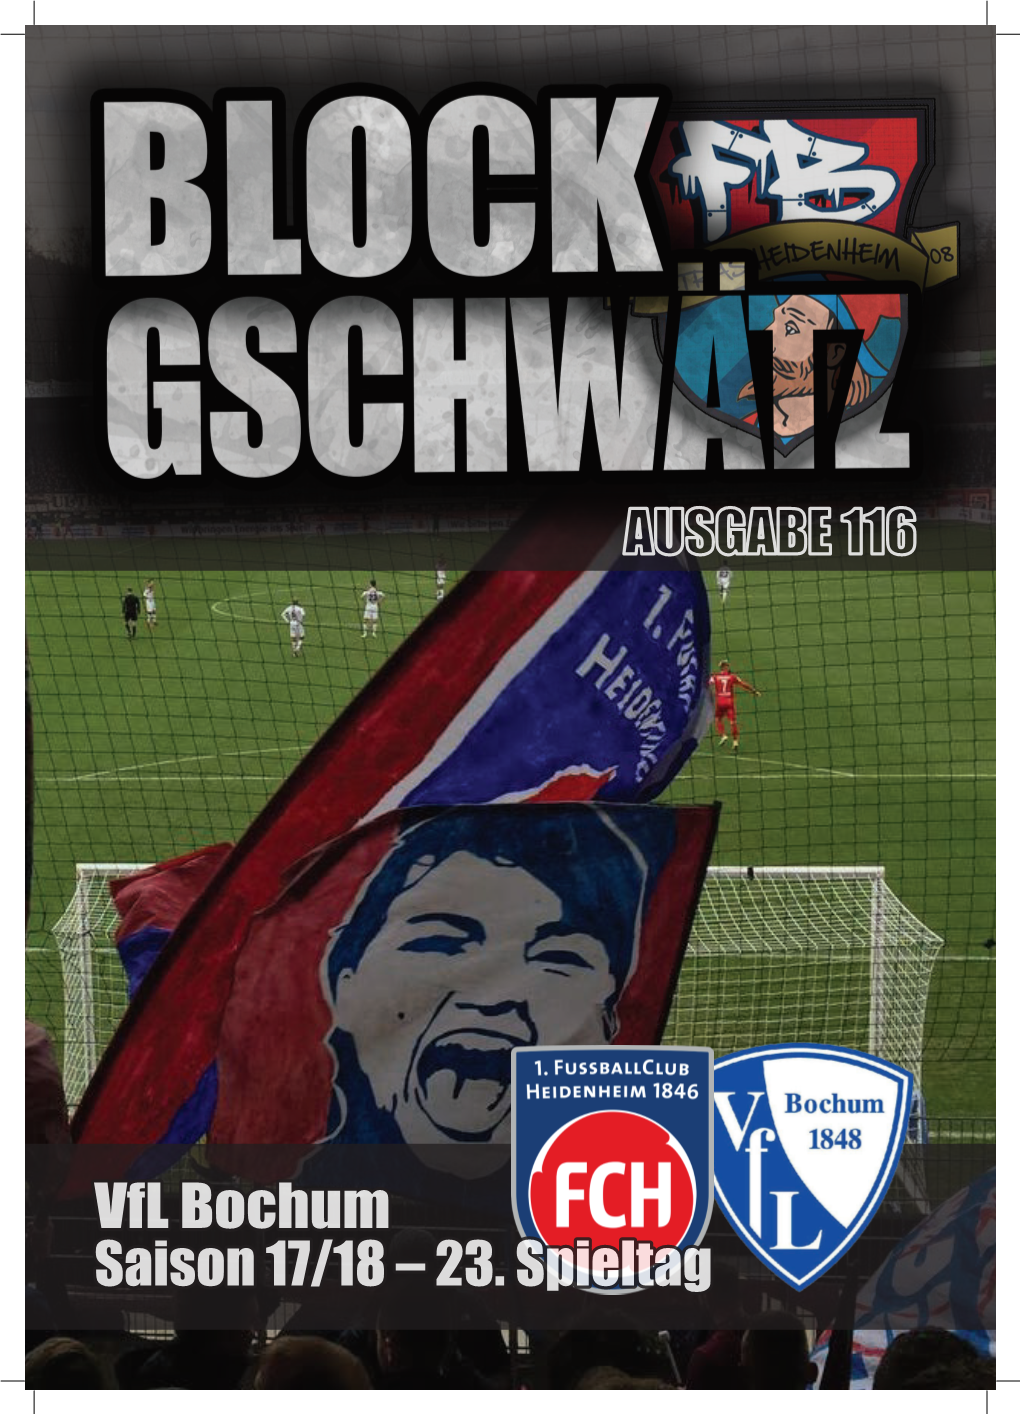 Vfl Bochum Saison 17/18 – 23